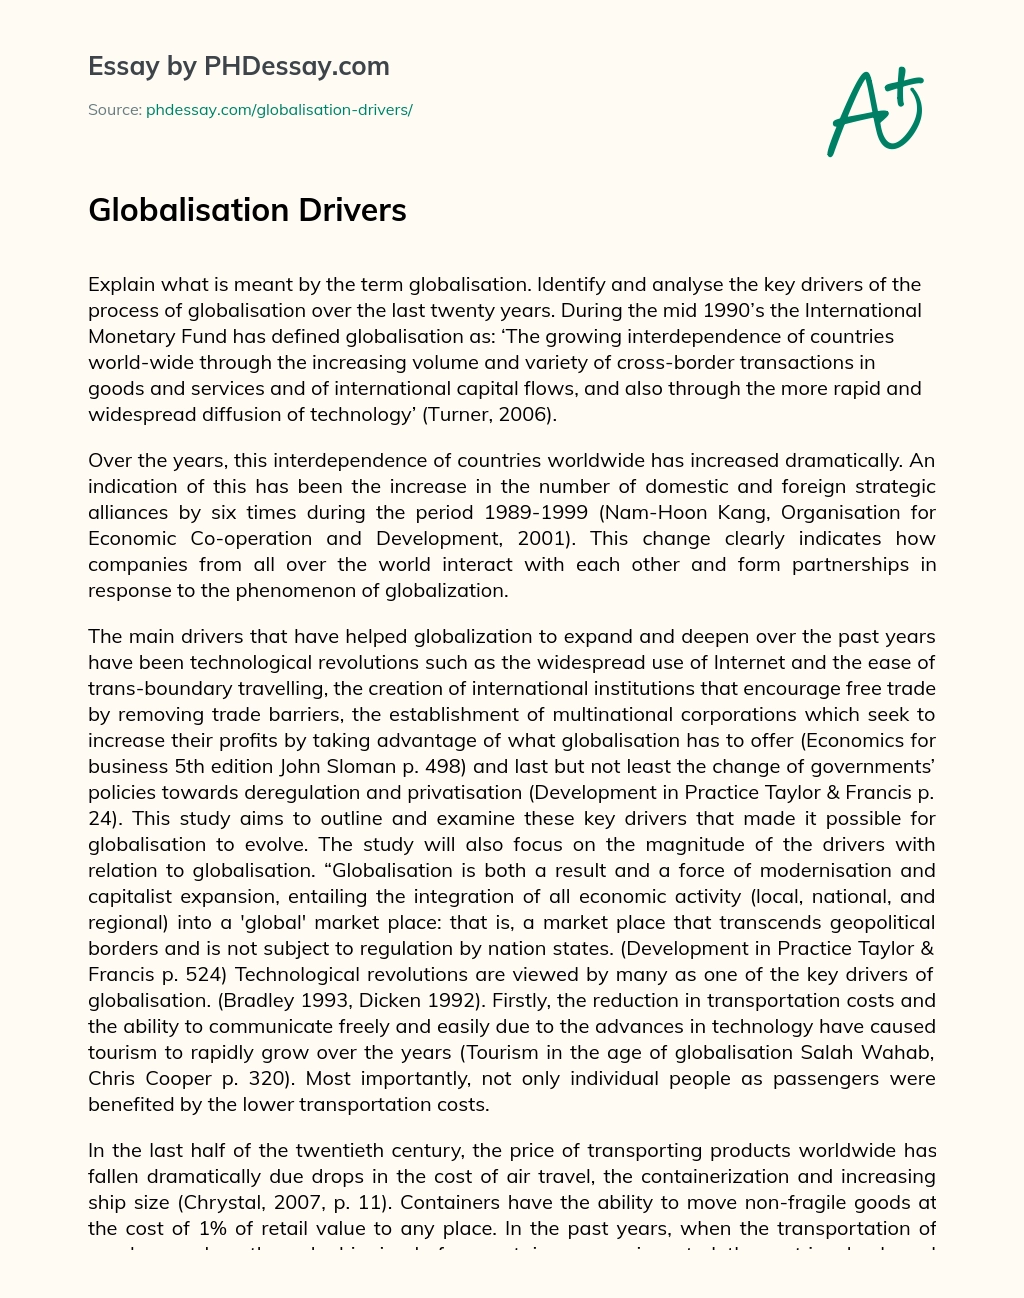 Globalisation Drivers essay